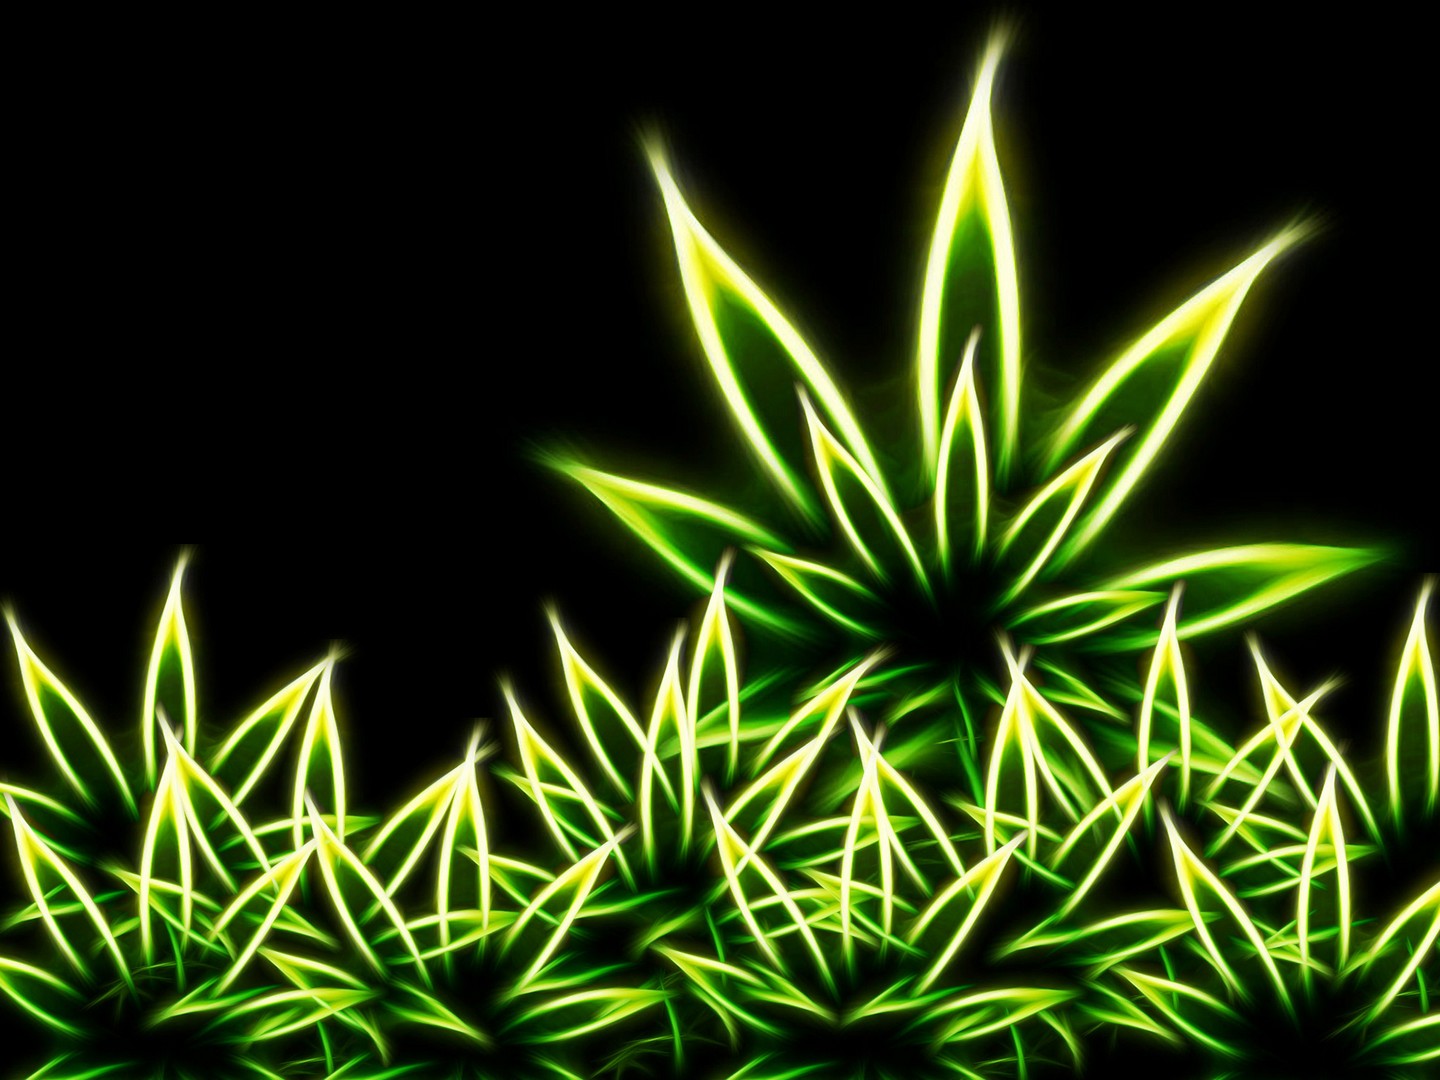 Cannabis Marijuana Weed Wallpaper Backgrounds Screensavers Afalchi Free images wallpape [afalchi.blogspot.com]